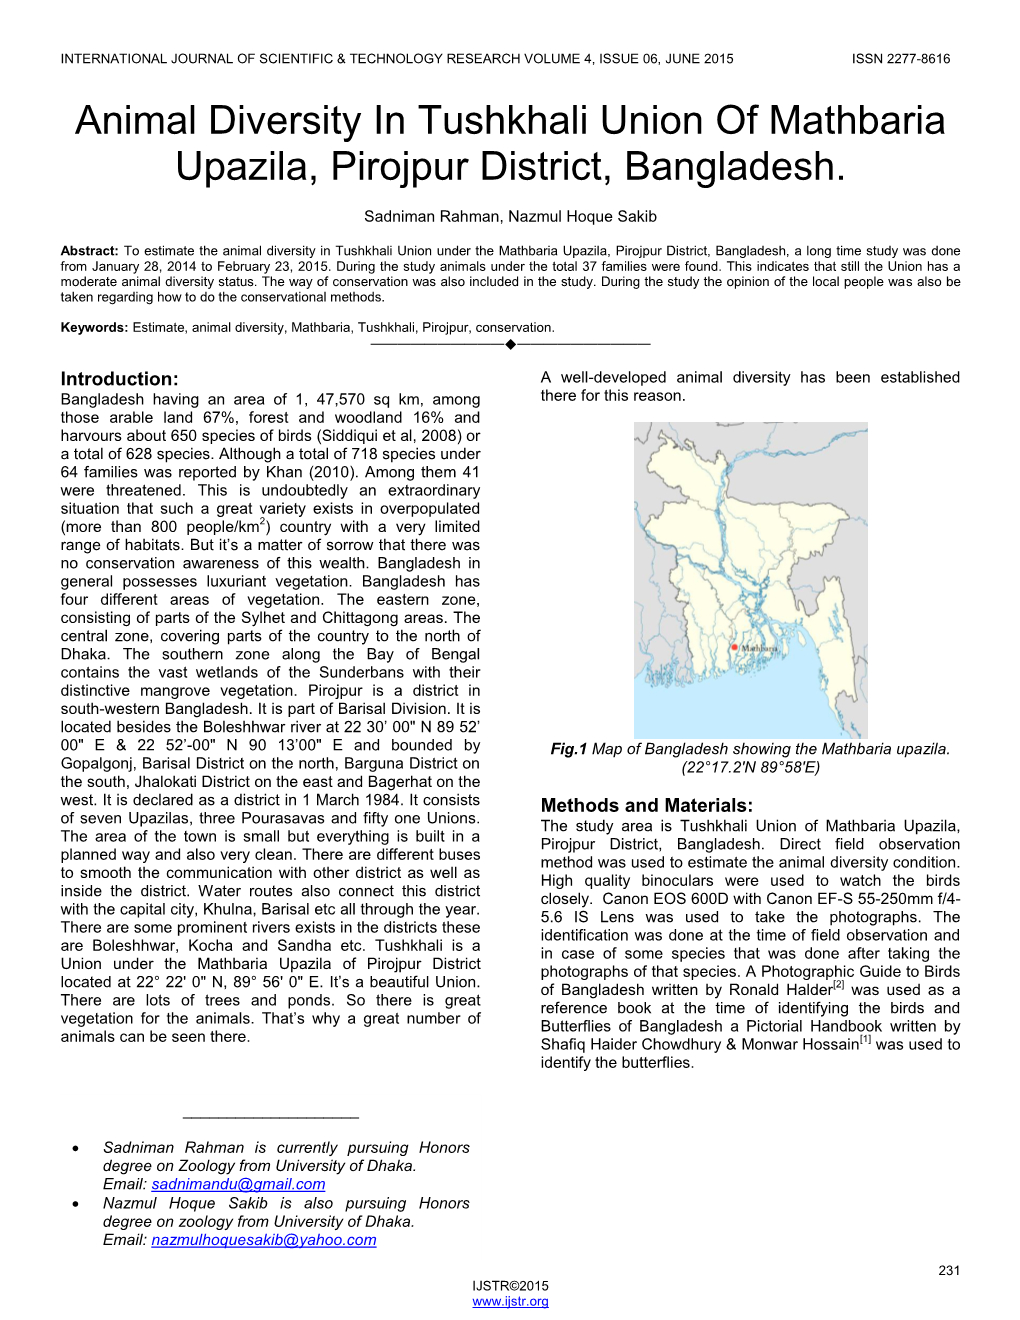 Animal Diversity in Tushkhali Union of Mathbaria Upazila, Pirojpur District, Bangladesh